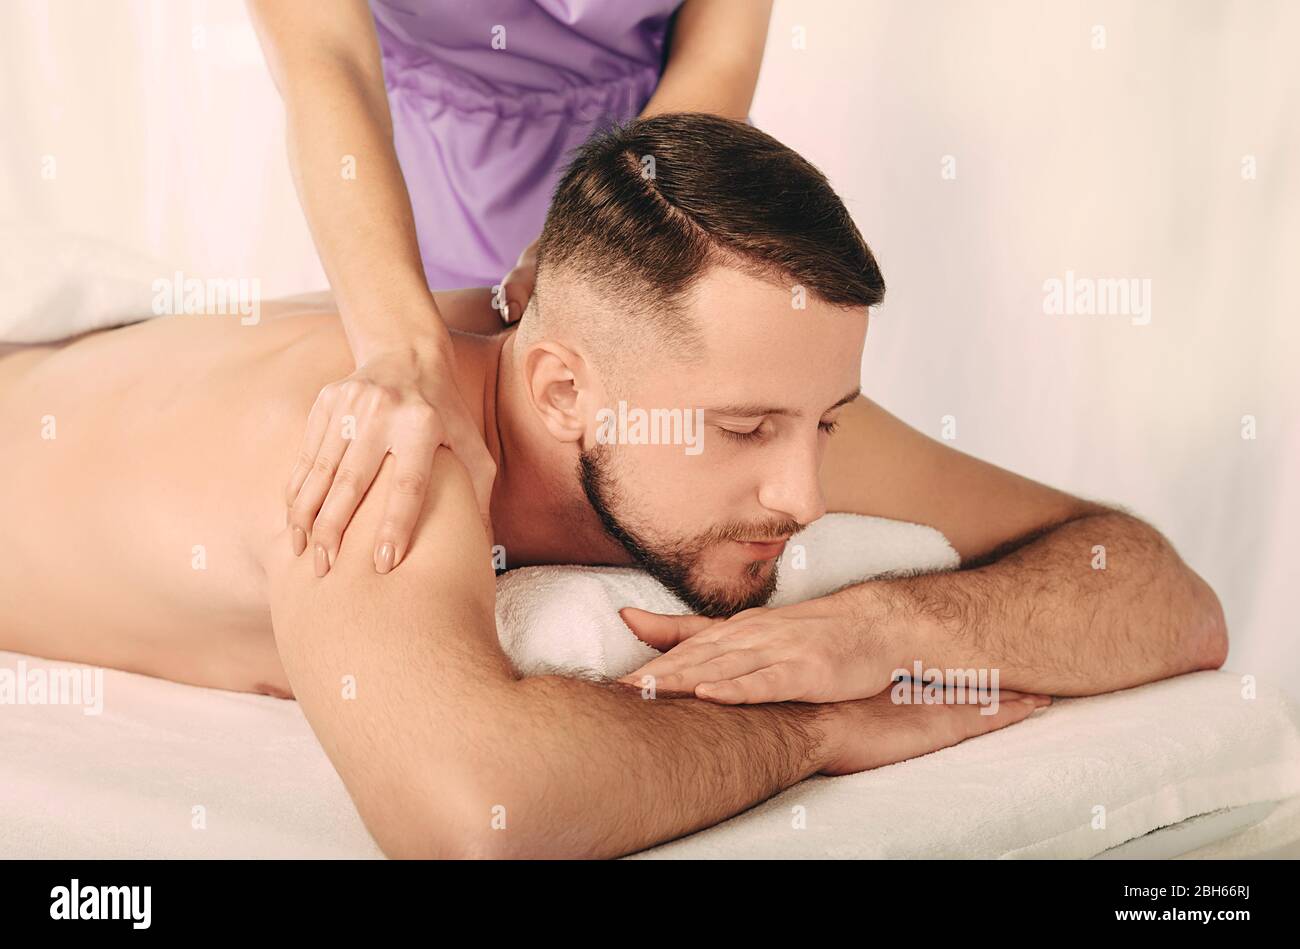 Professional masseur massaging man's back at wellness center Stock Photo